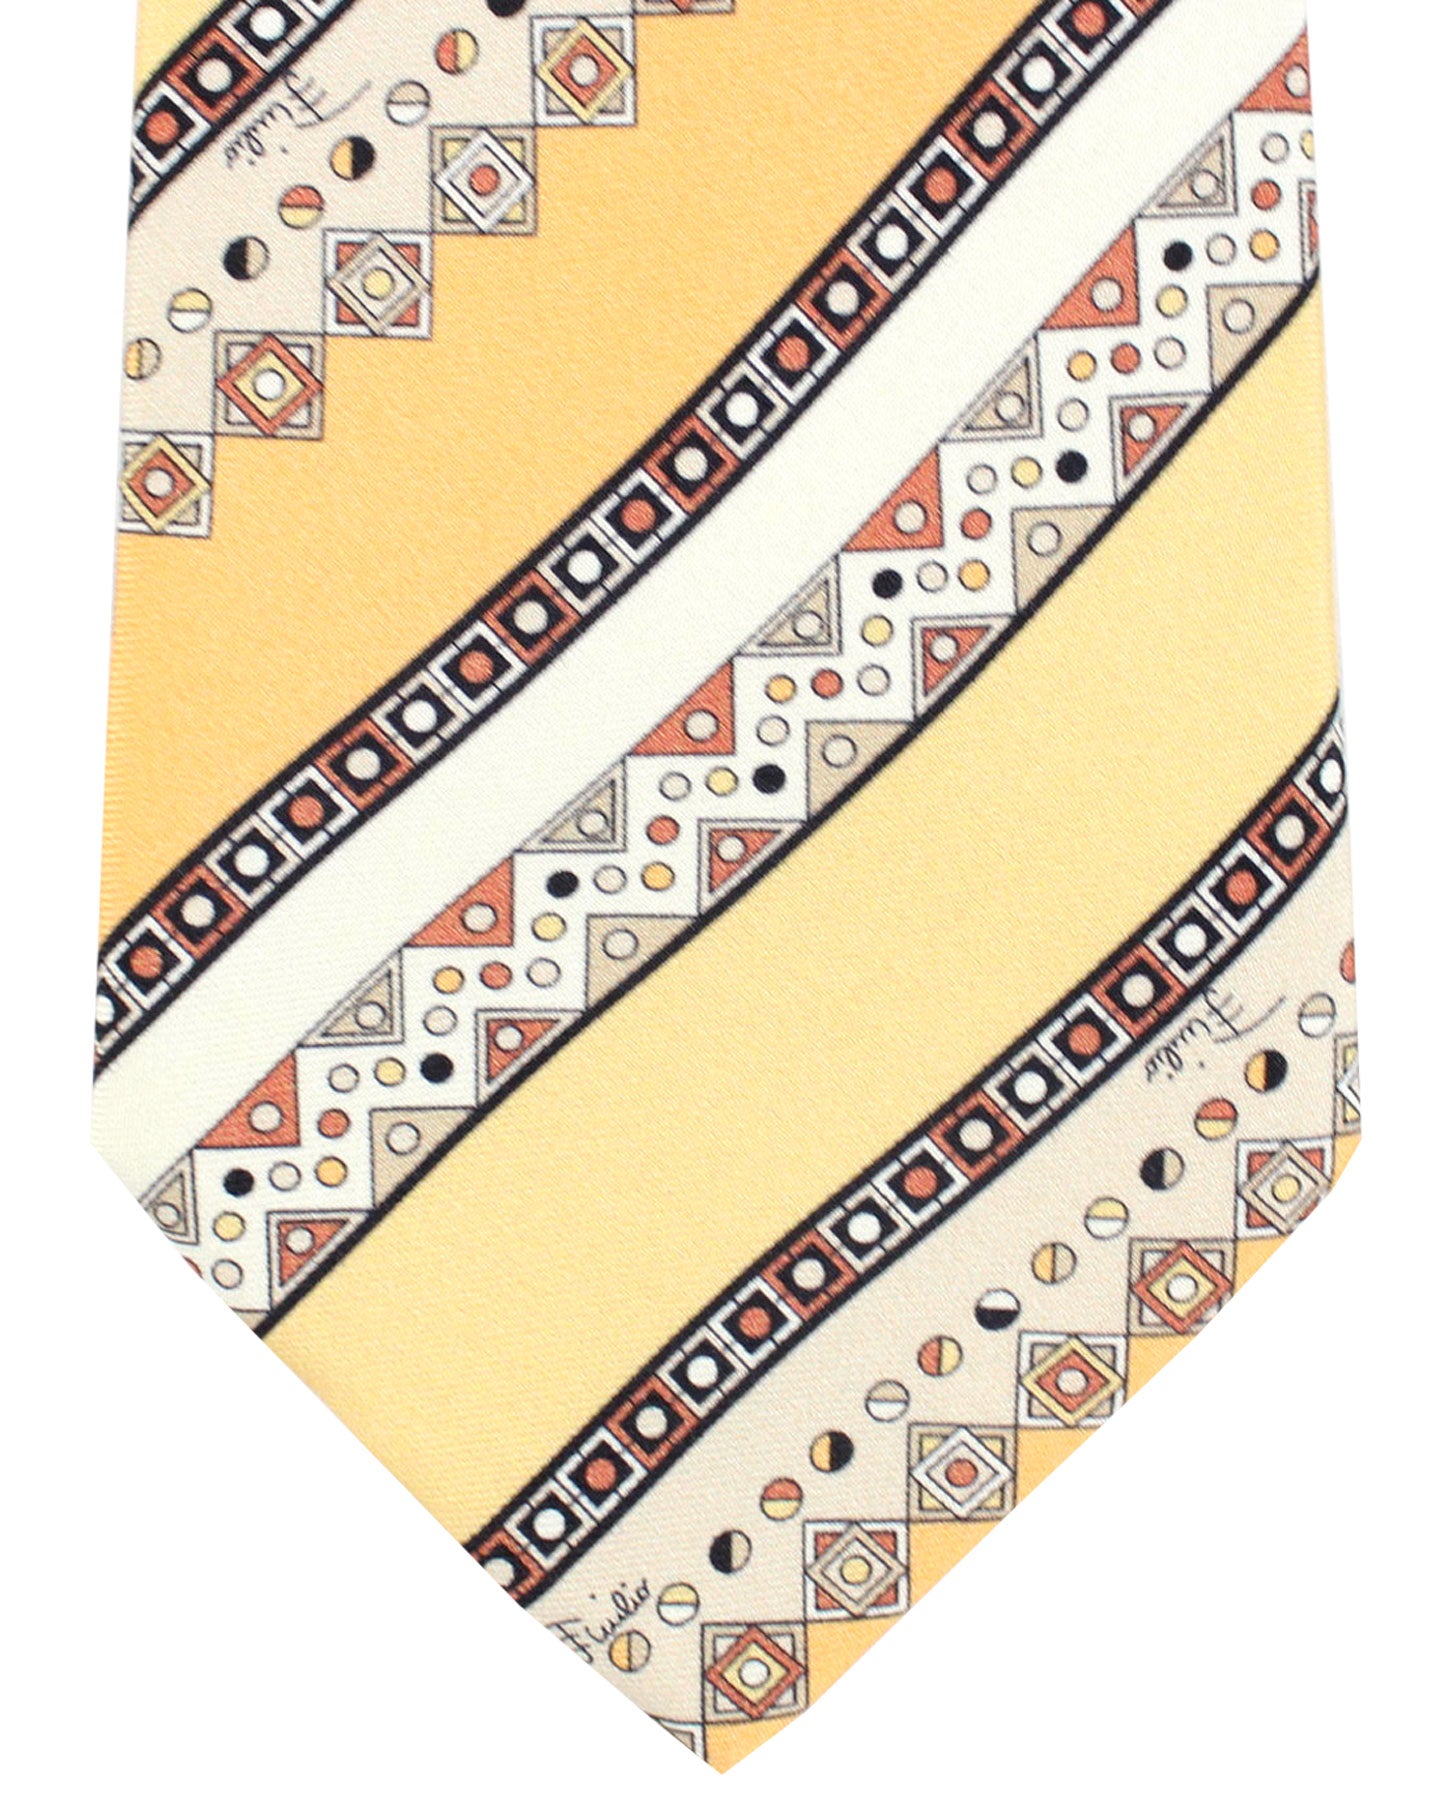 Emilio Pucci Silk Tie Signature Peach Orange Gray Brown Stripes Design